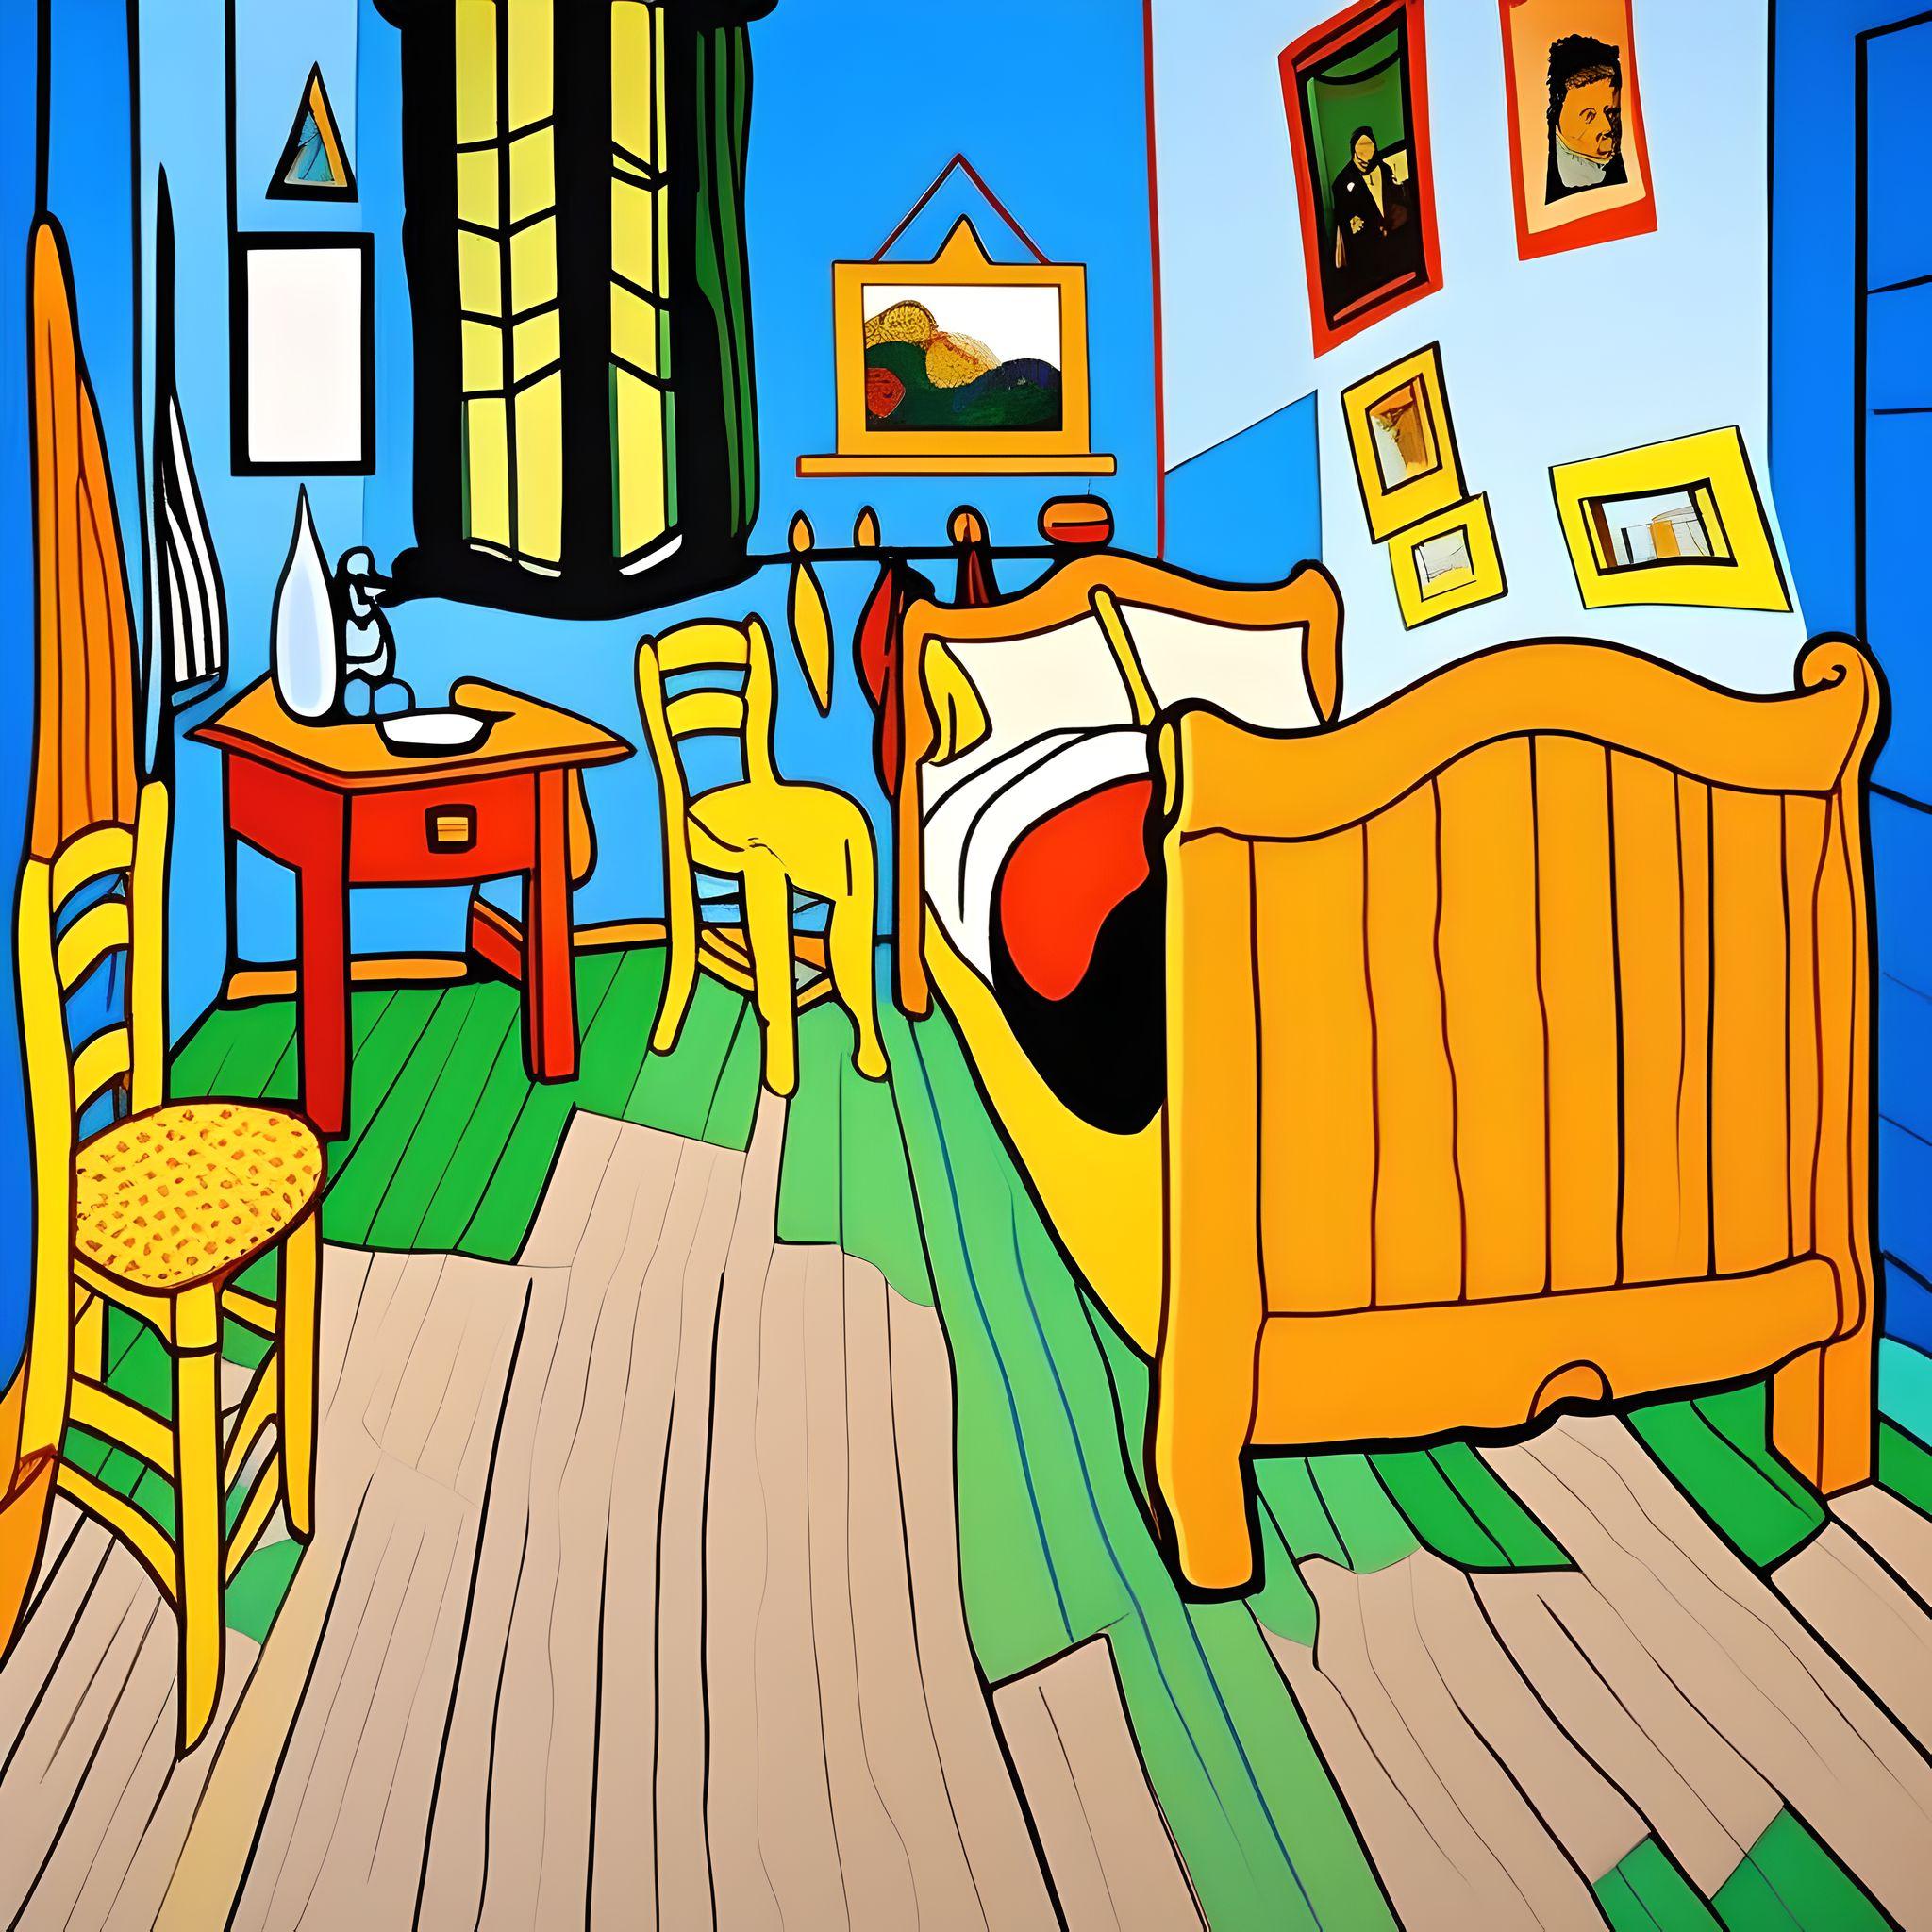 Re-imagine Vincent van Gogh Bedroom in Arles – #ArtCommunity